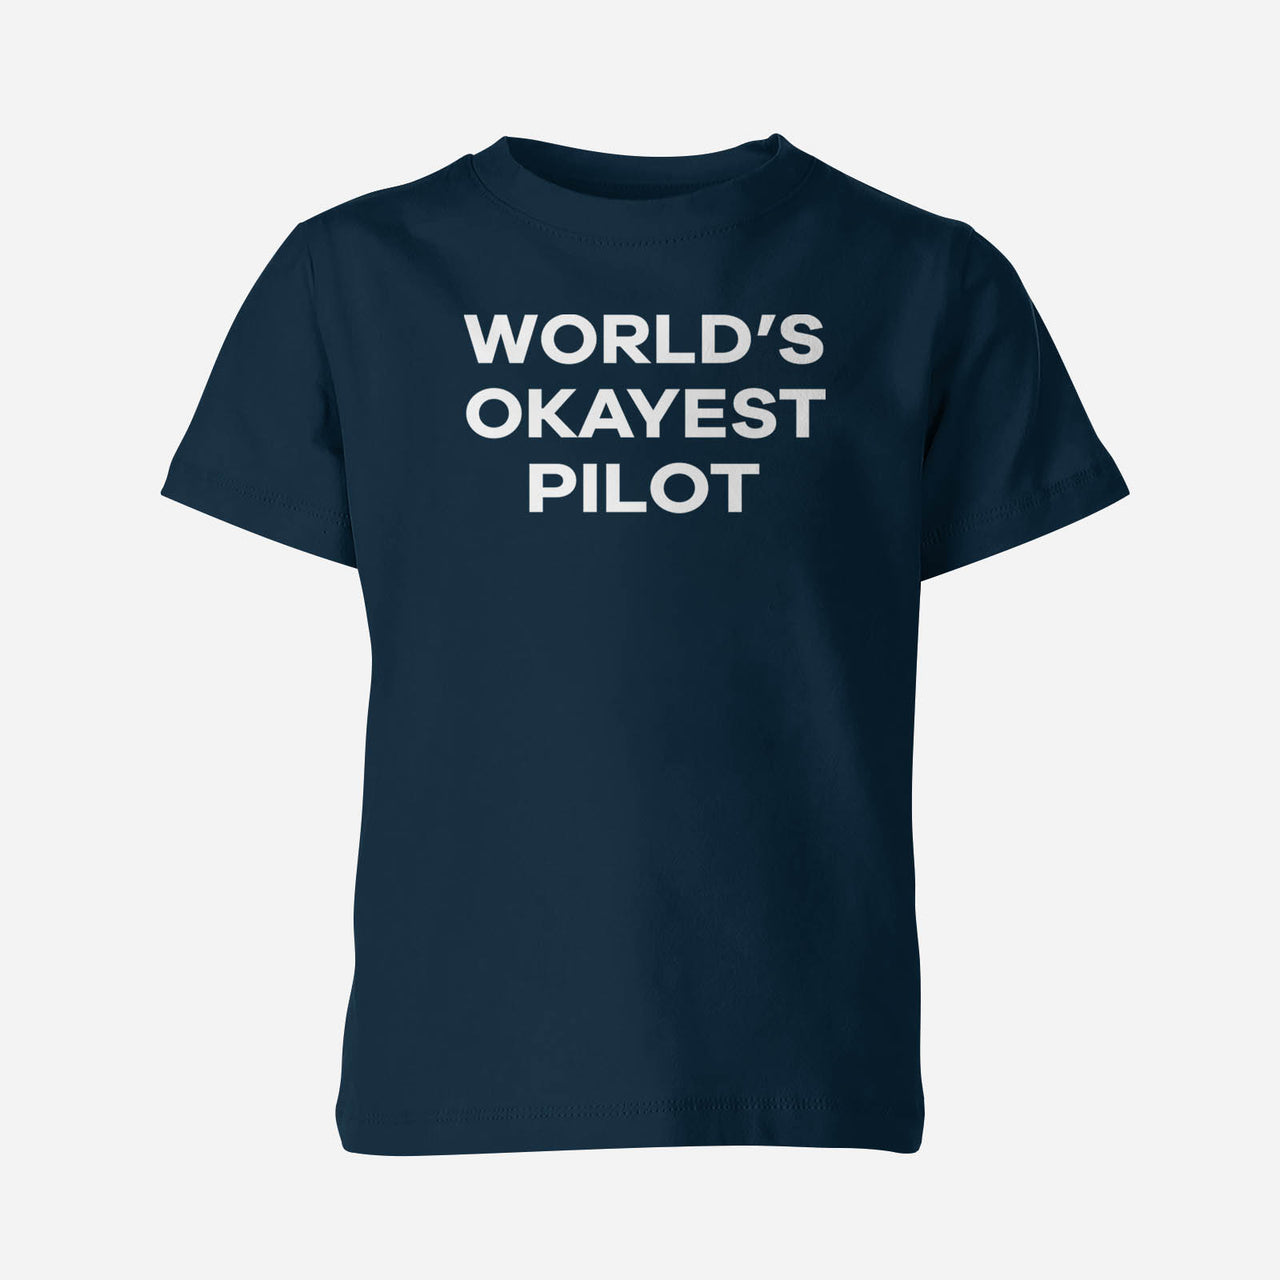 World's Okayest Pilot Designed Children T-Shirts